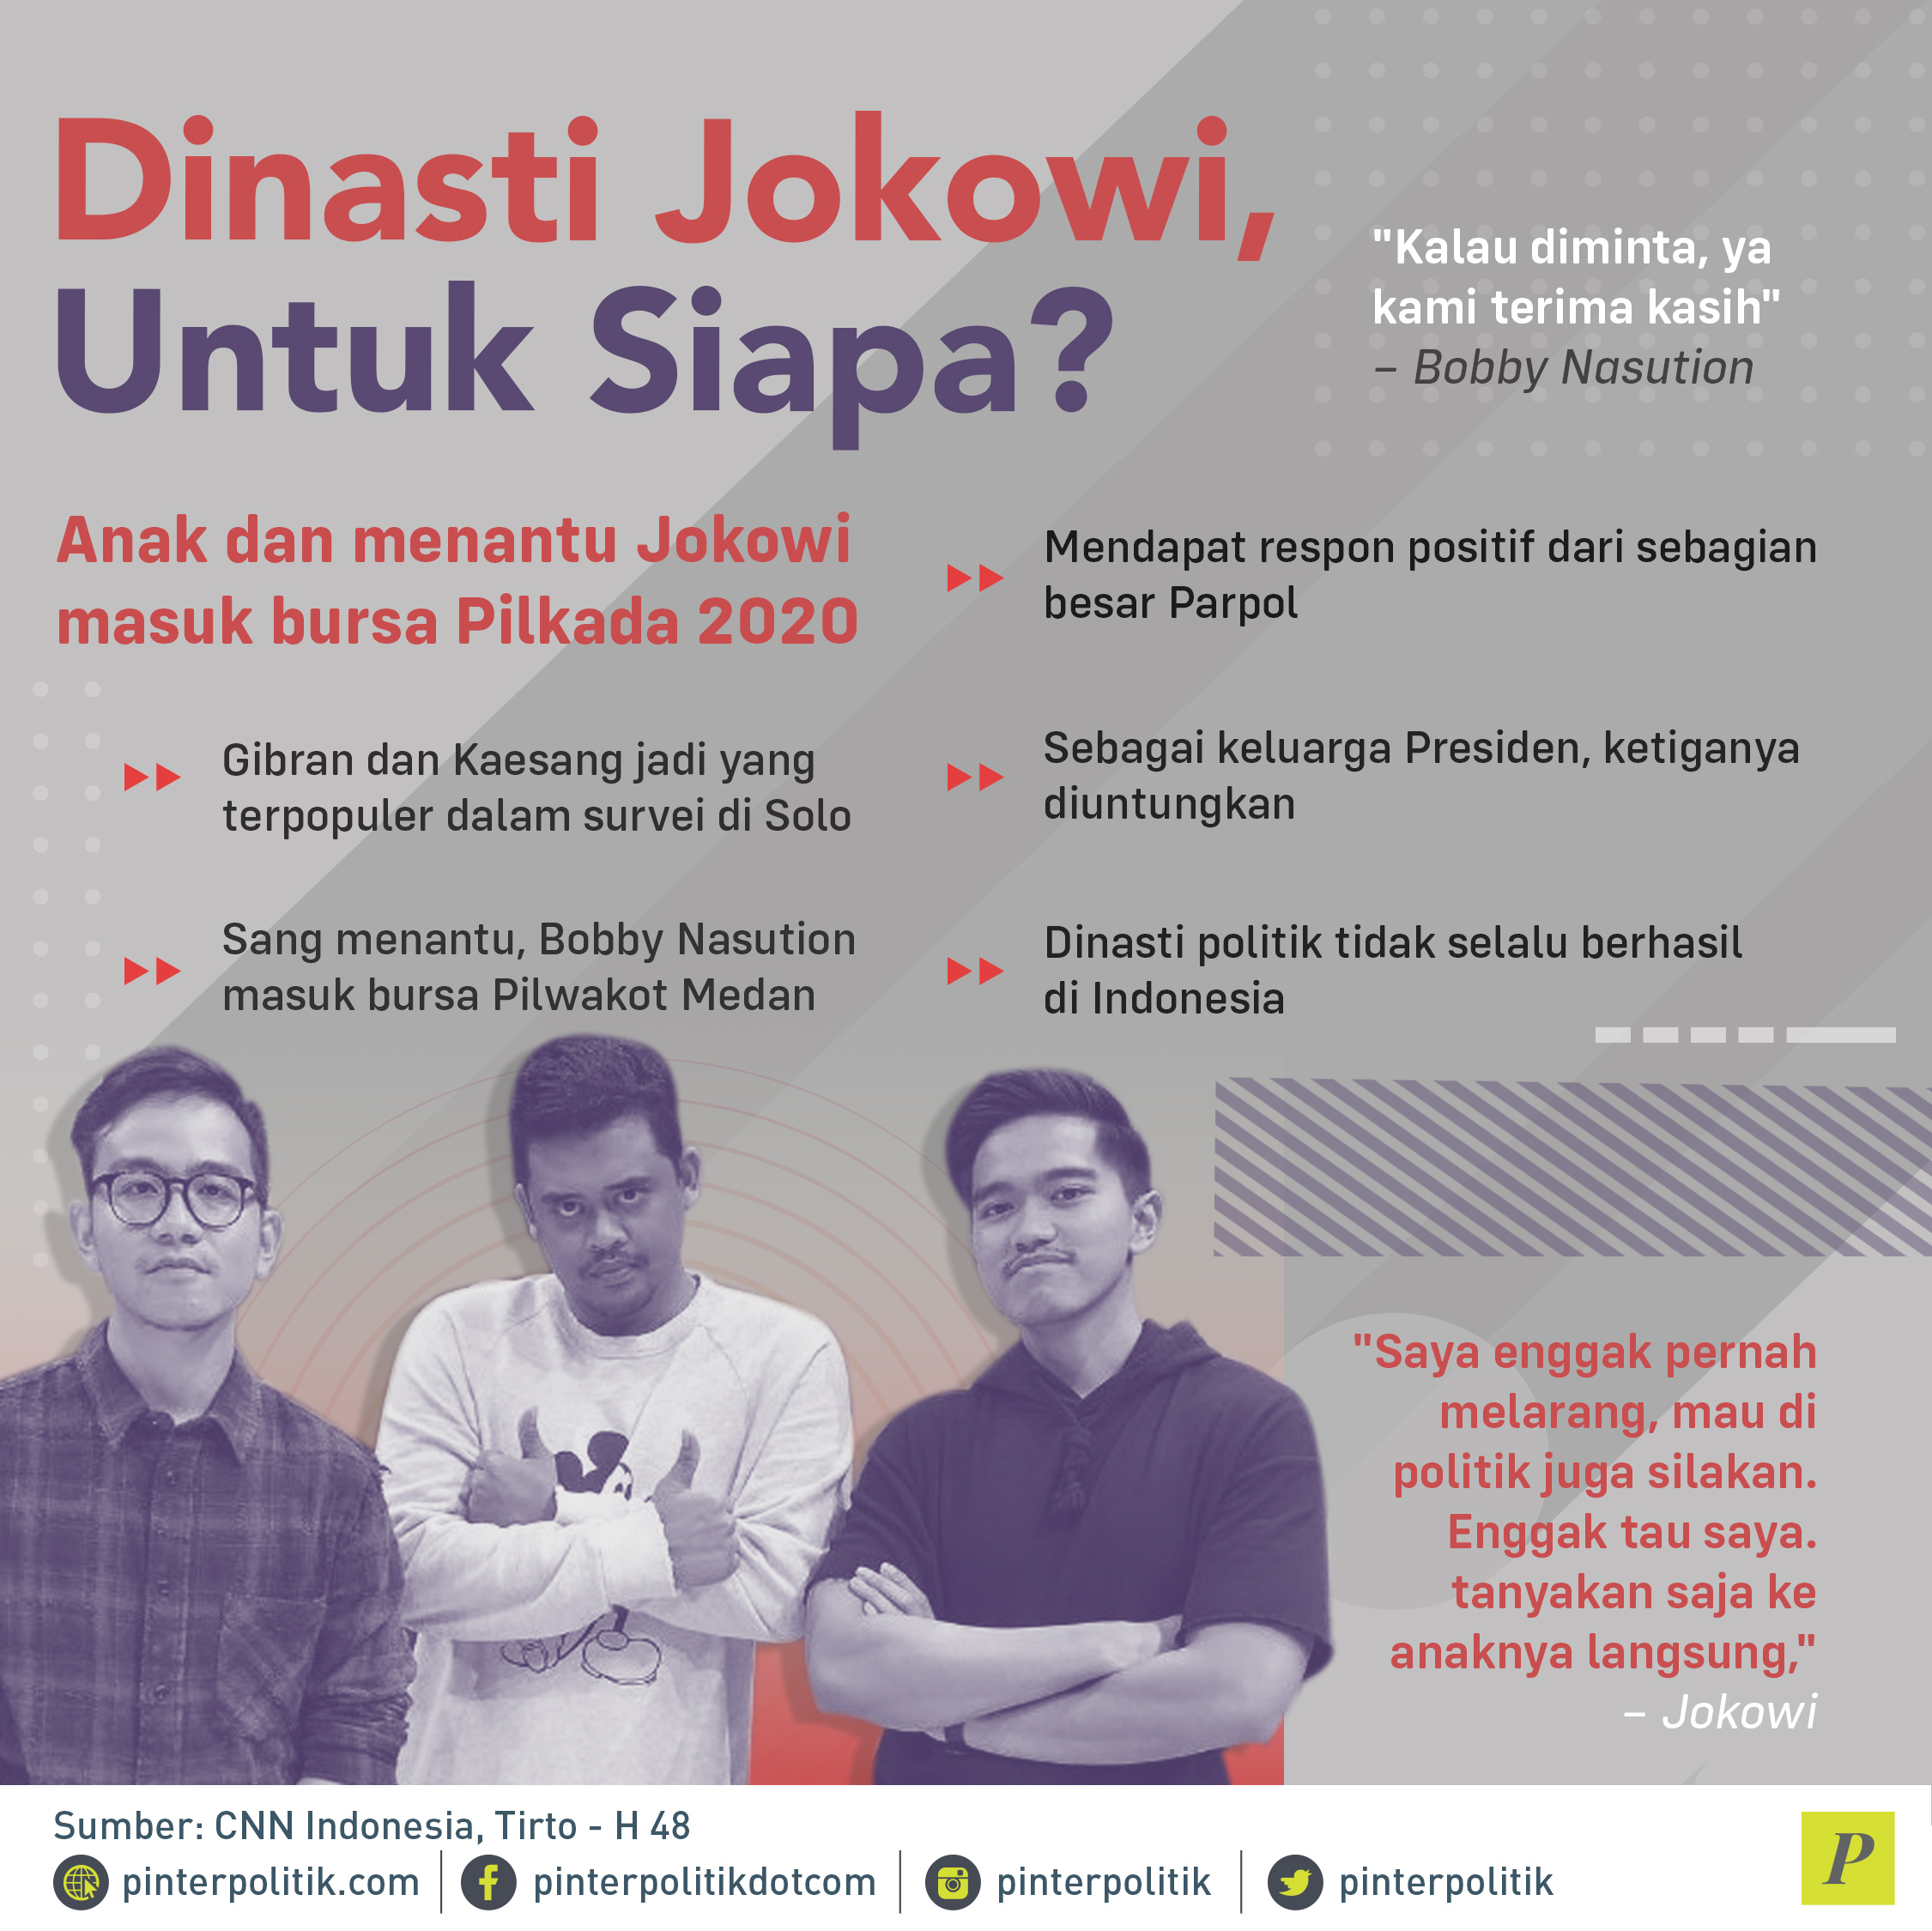 Anak dan menantu Jokowi masuk bursa Pilkada 2020